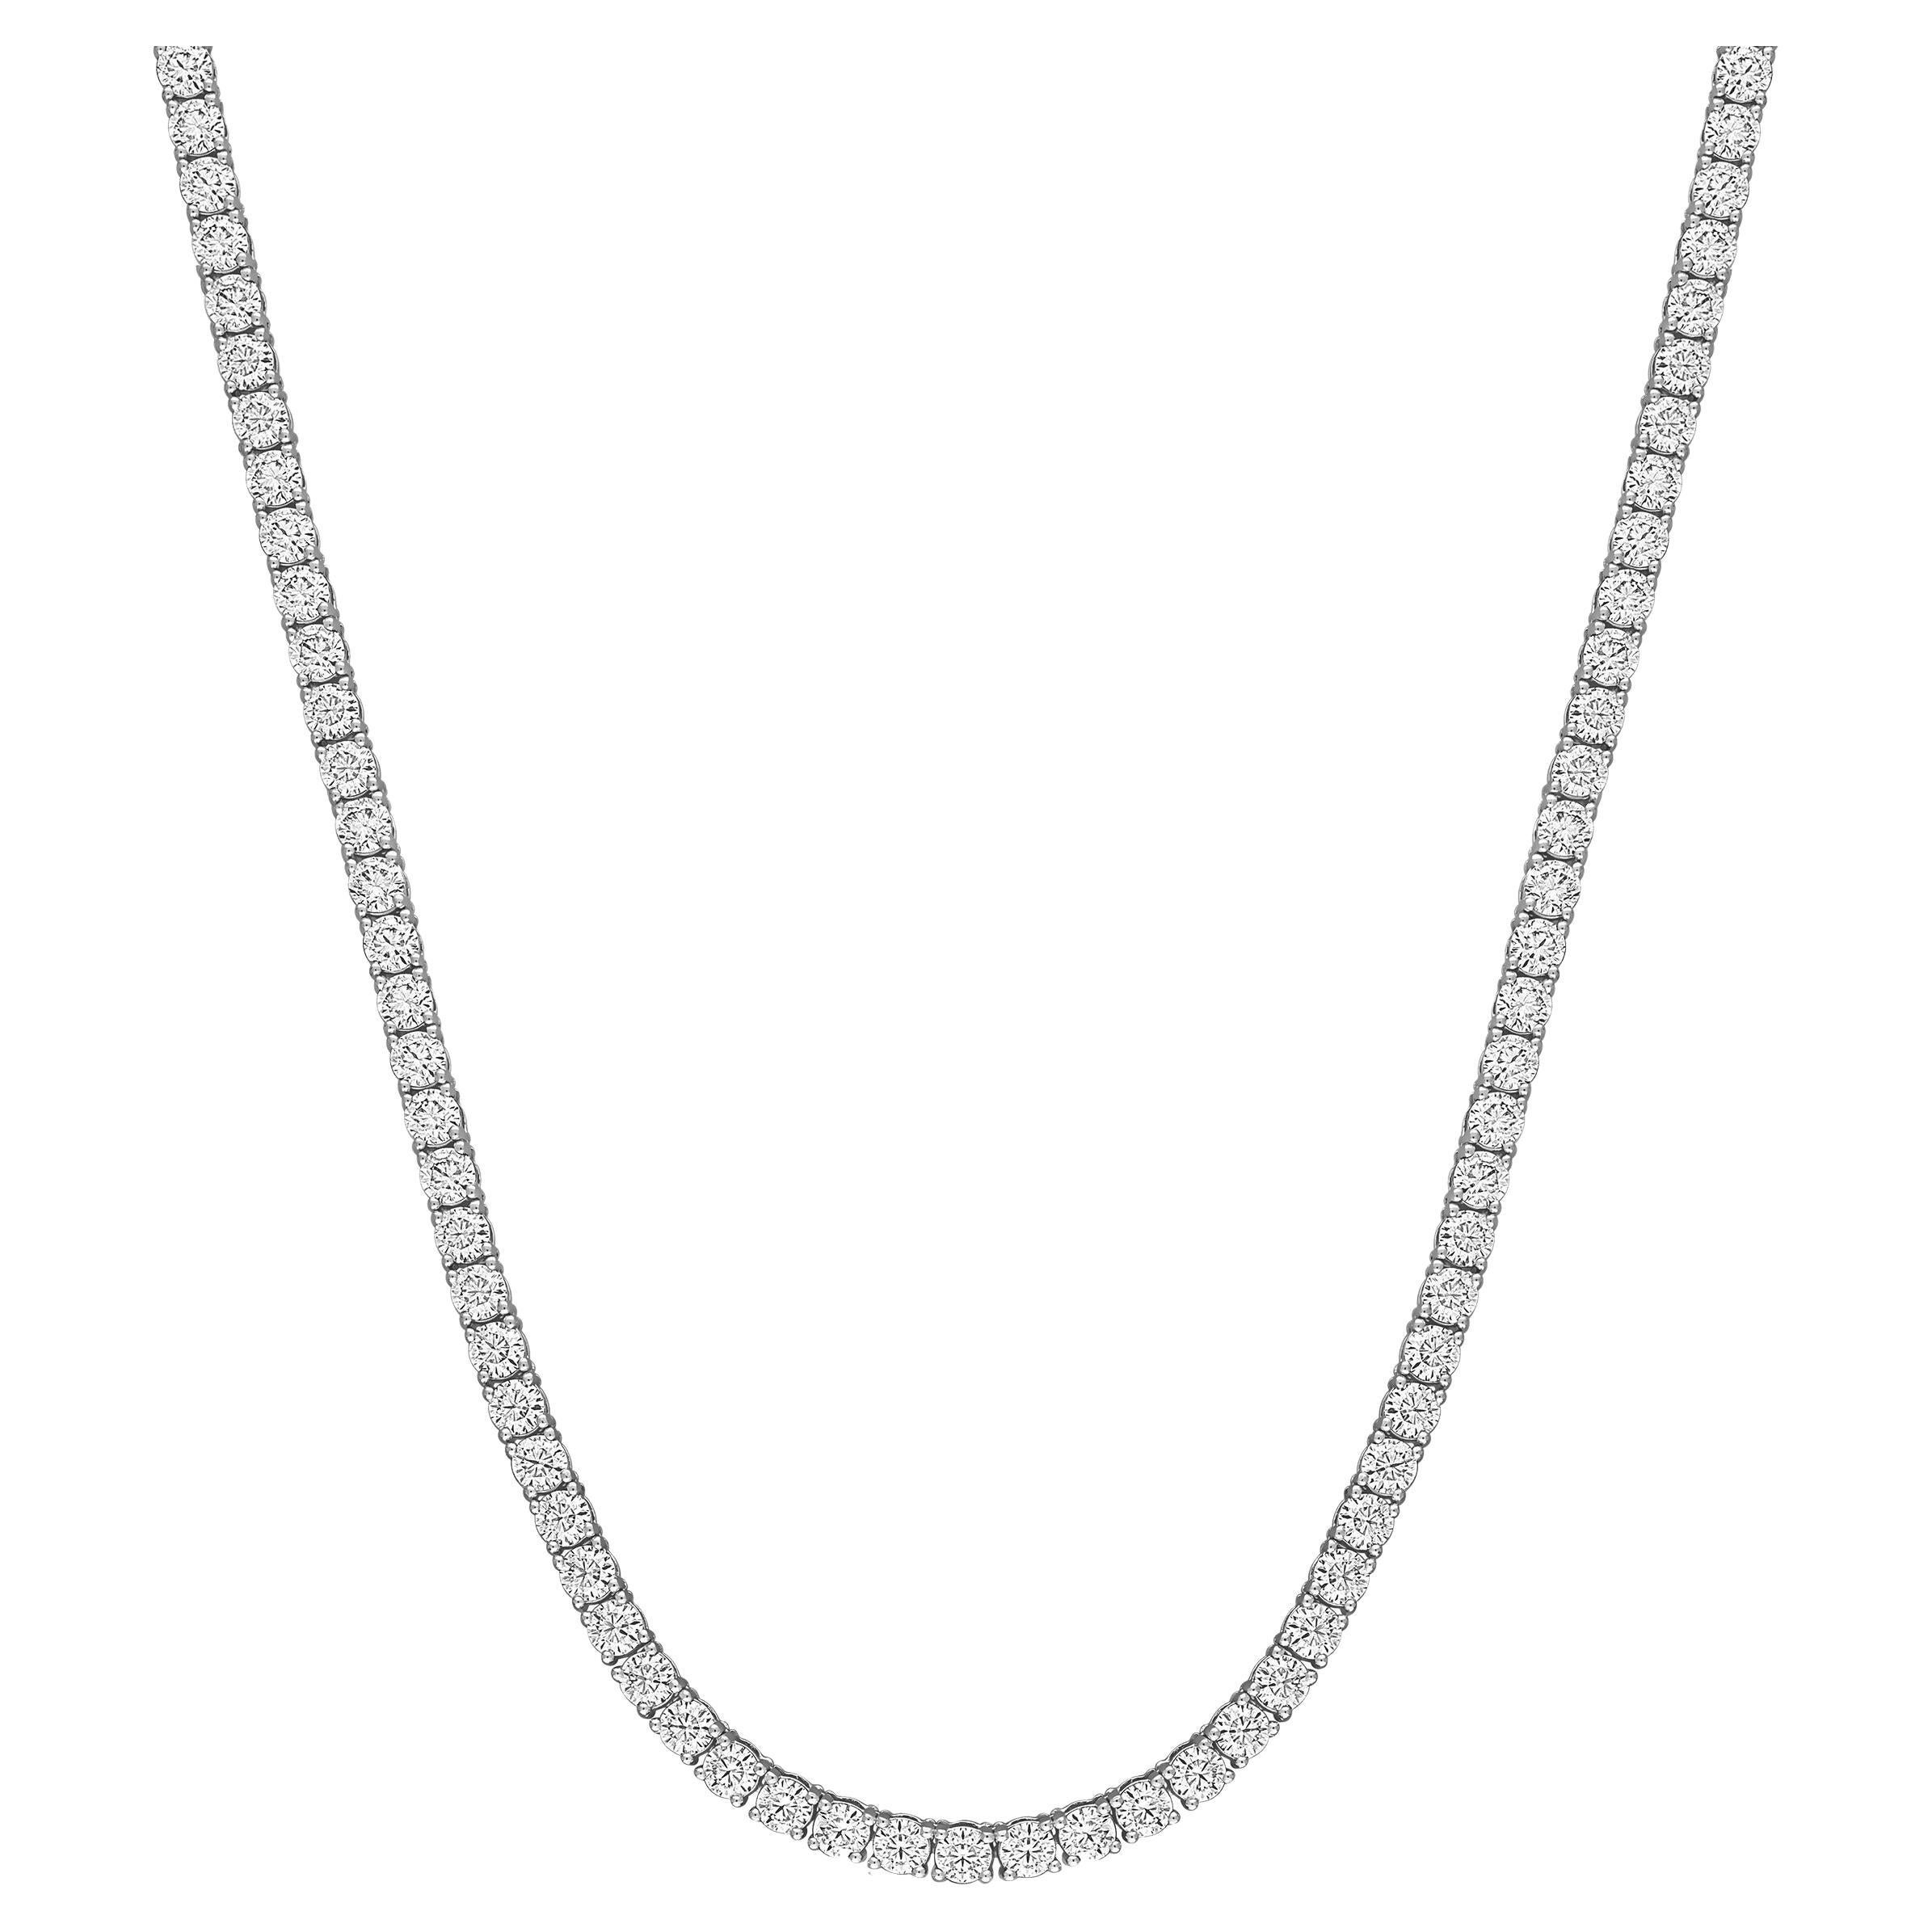 17.21 Carat Diamond Tennis Necklace in 14K White Gold